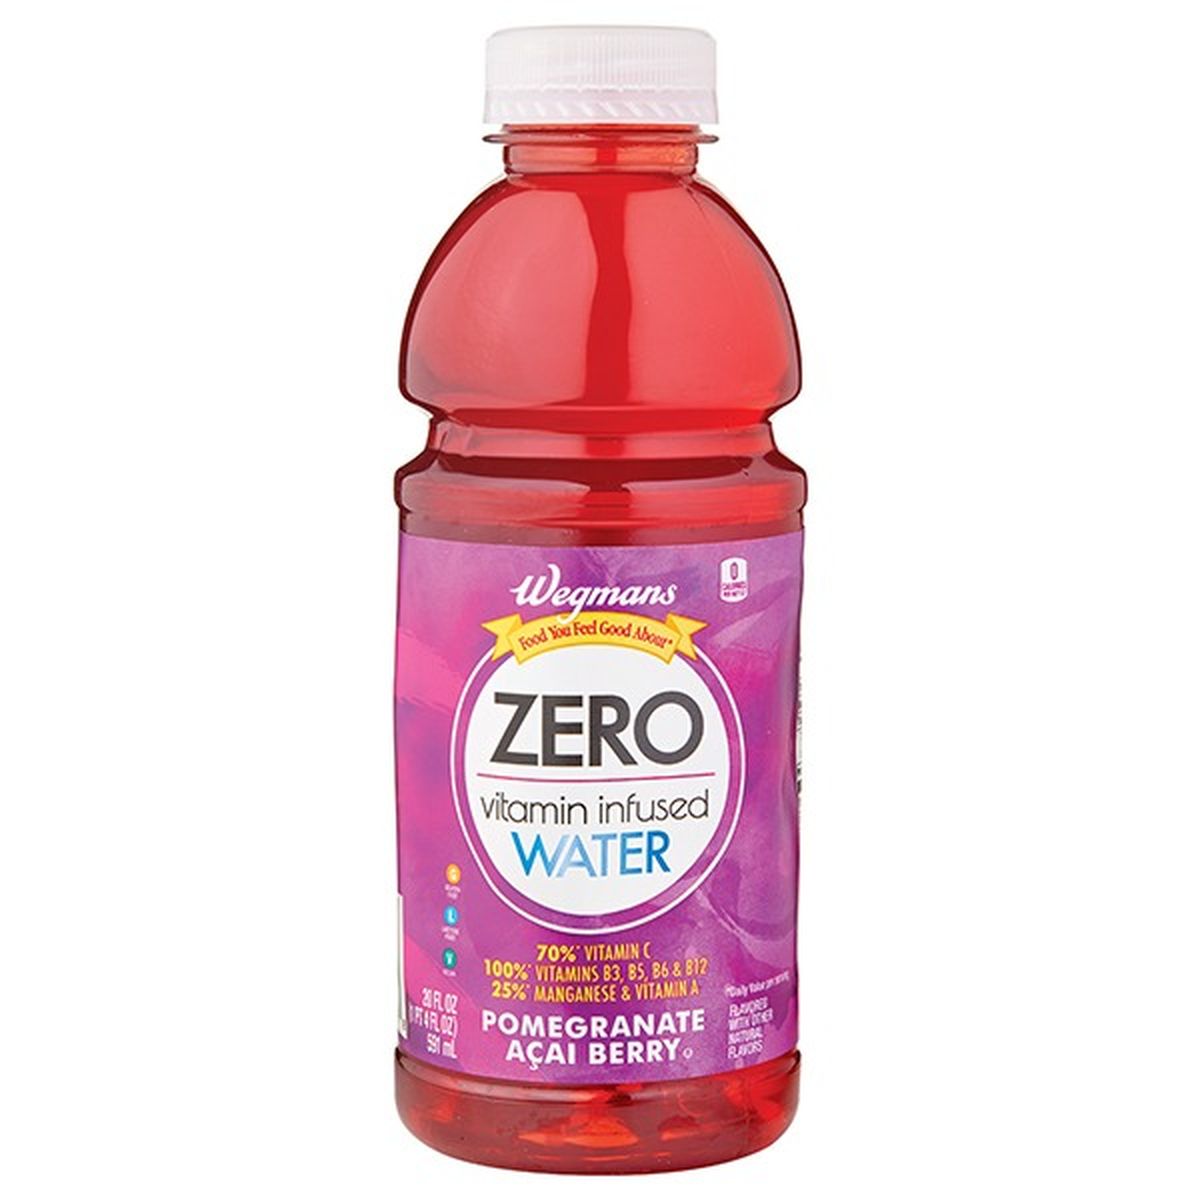 Calories in Wegmans Zero Vitamin Infused Water, Pomegranate Acai Berry